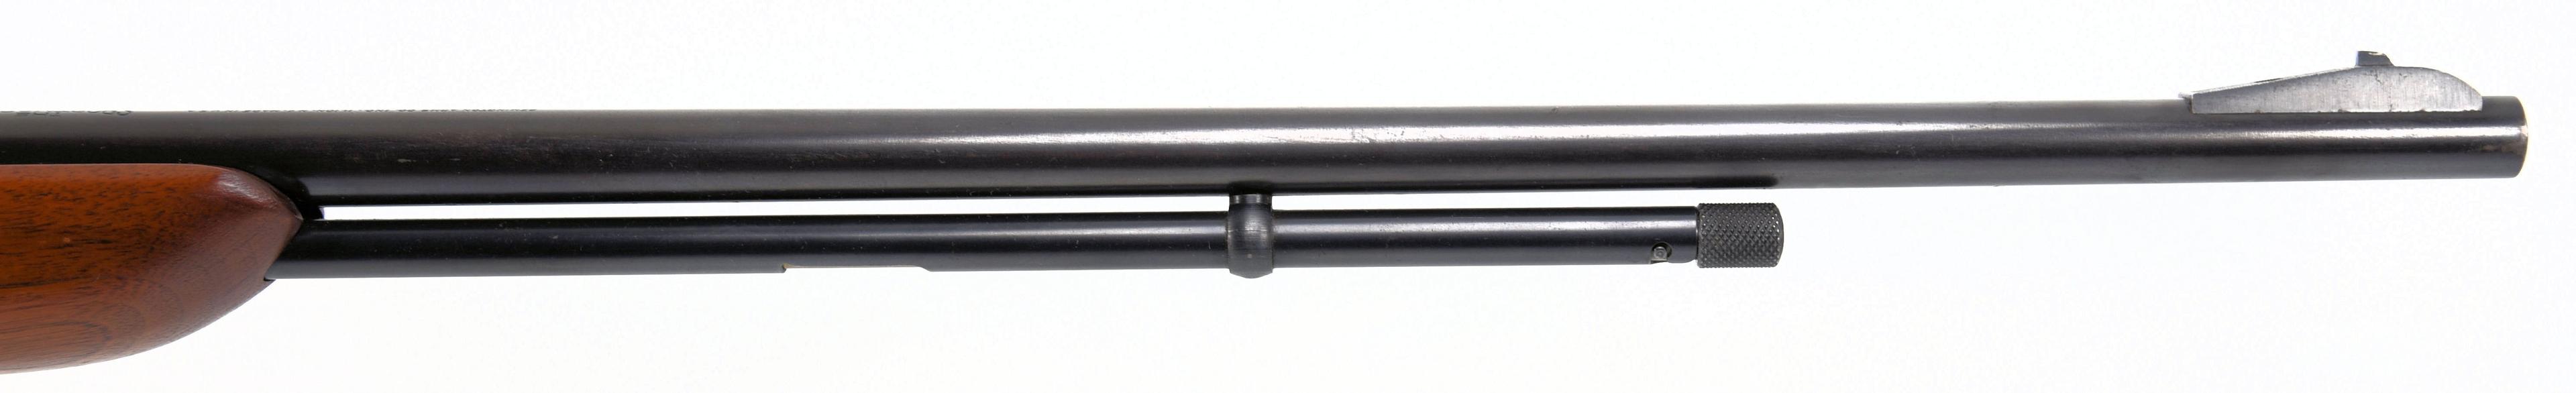 Remington Arms Co. 512-P Sportmaster Bolt Action Rifle